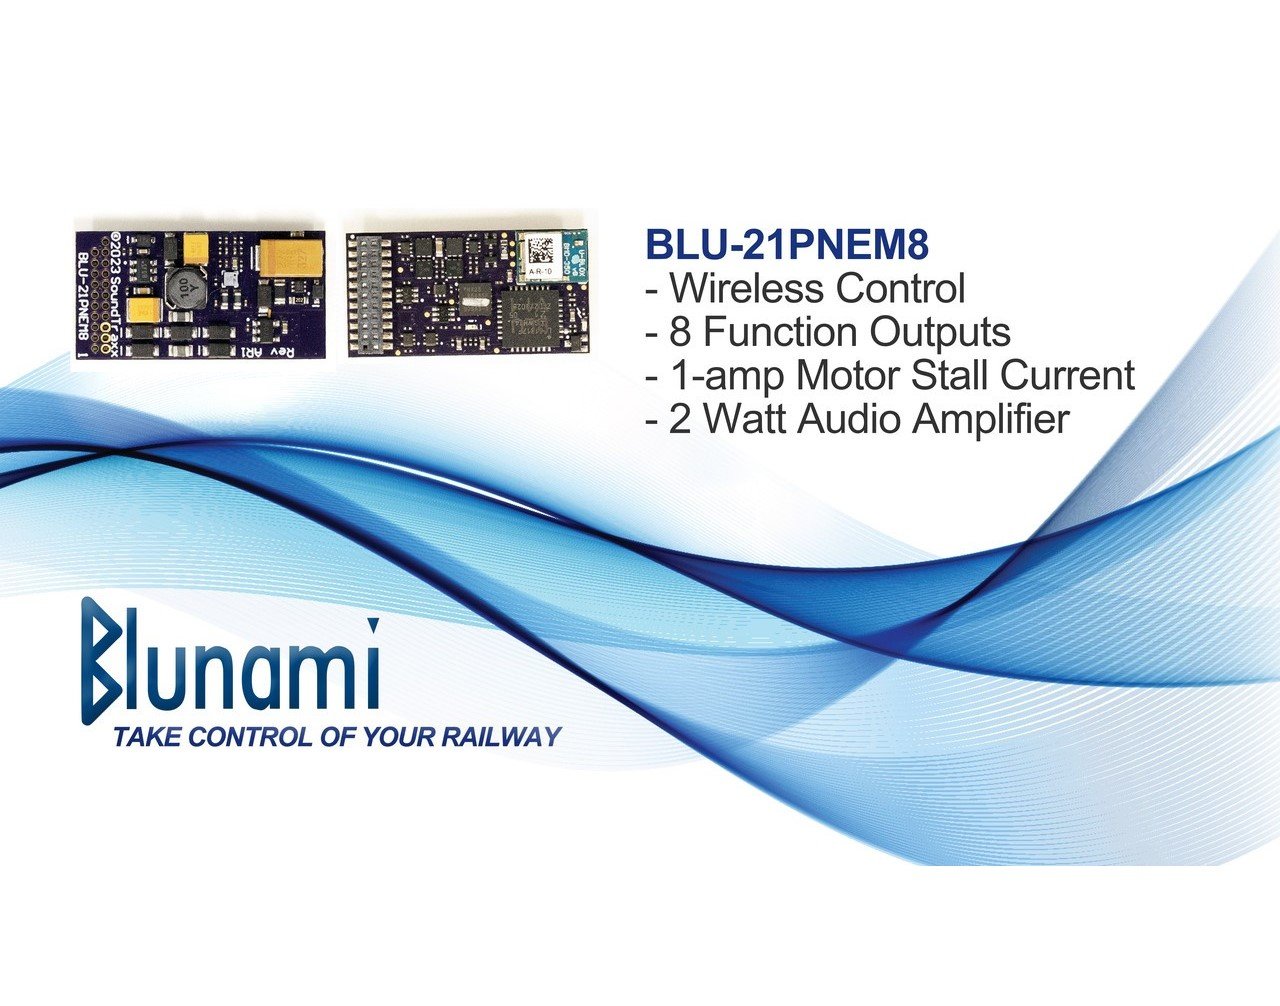 SoundTraxx Blunami BLU-21PNEM8 884608 Steam-2 Wireless DCC/SOUND Decoder